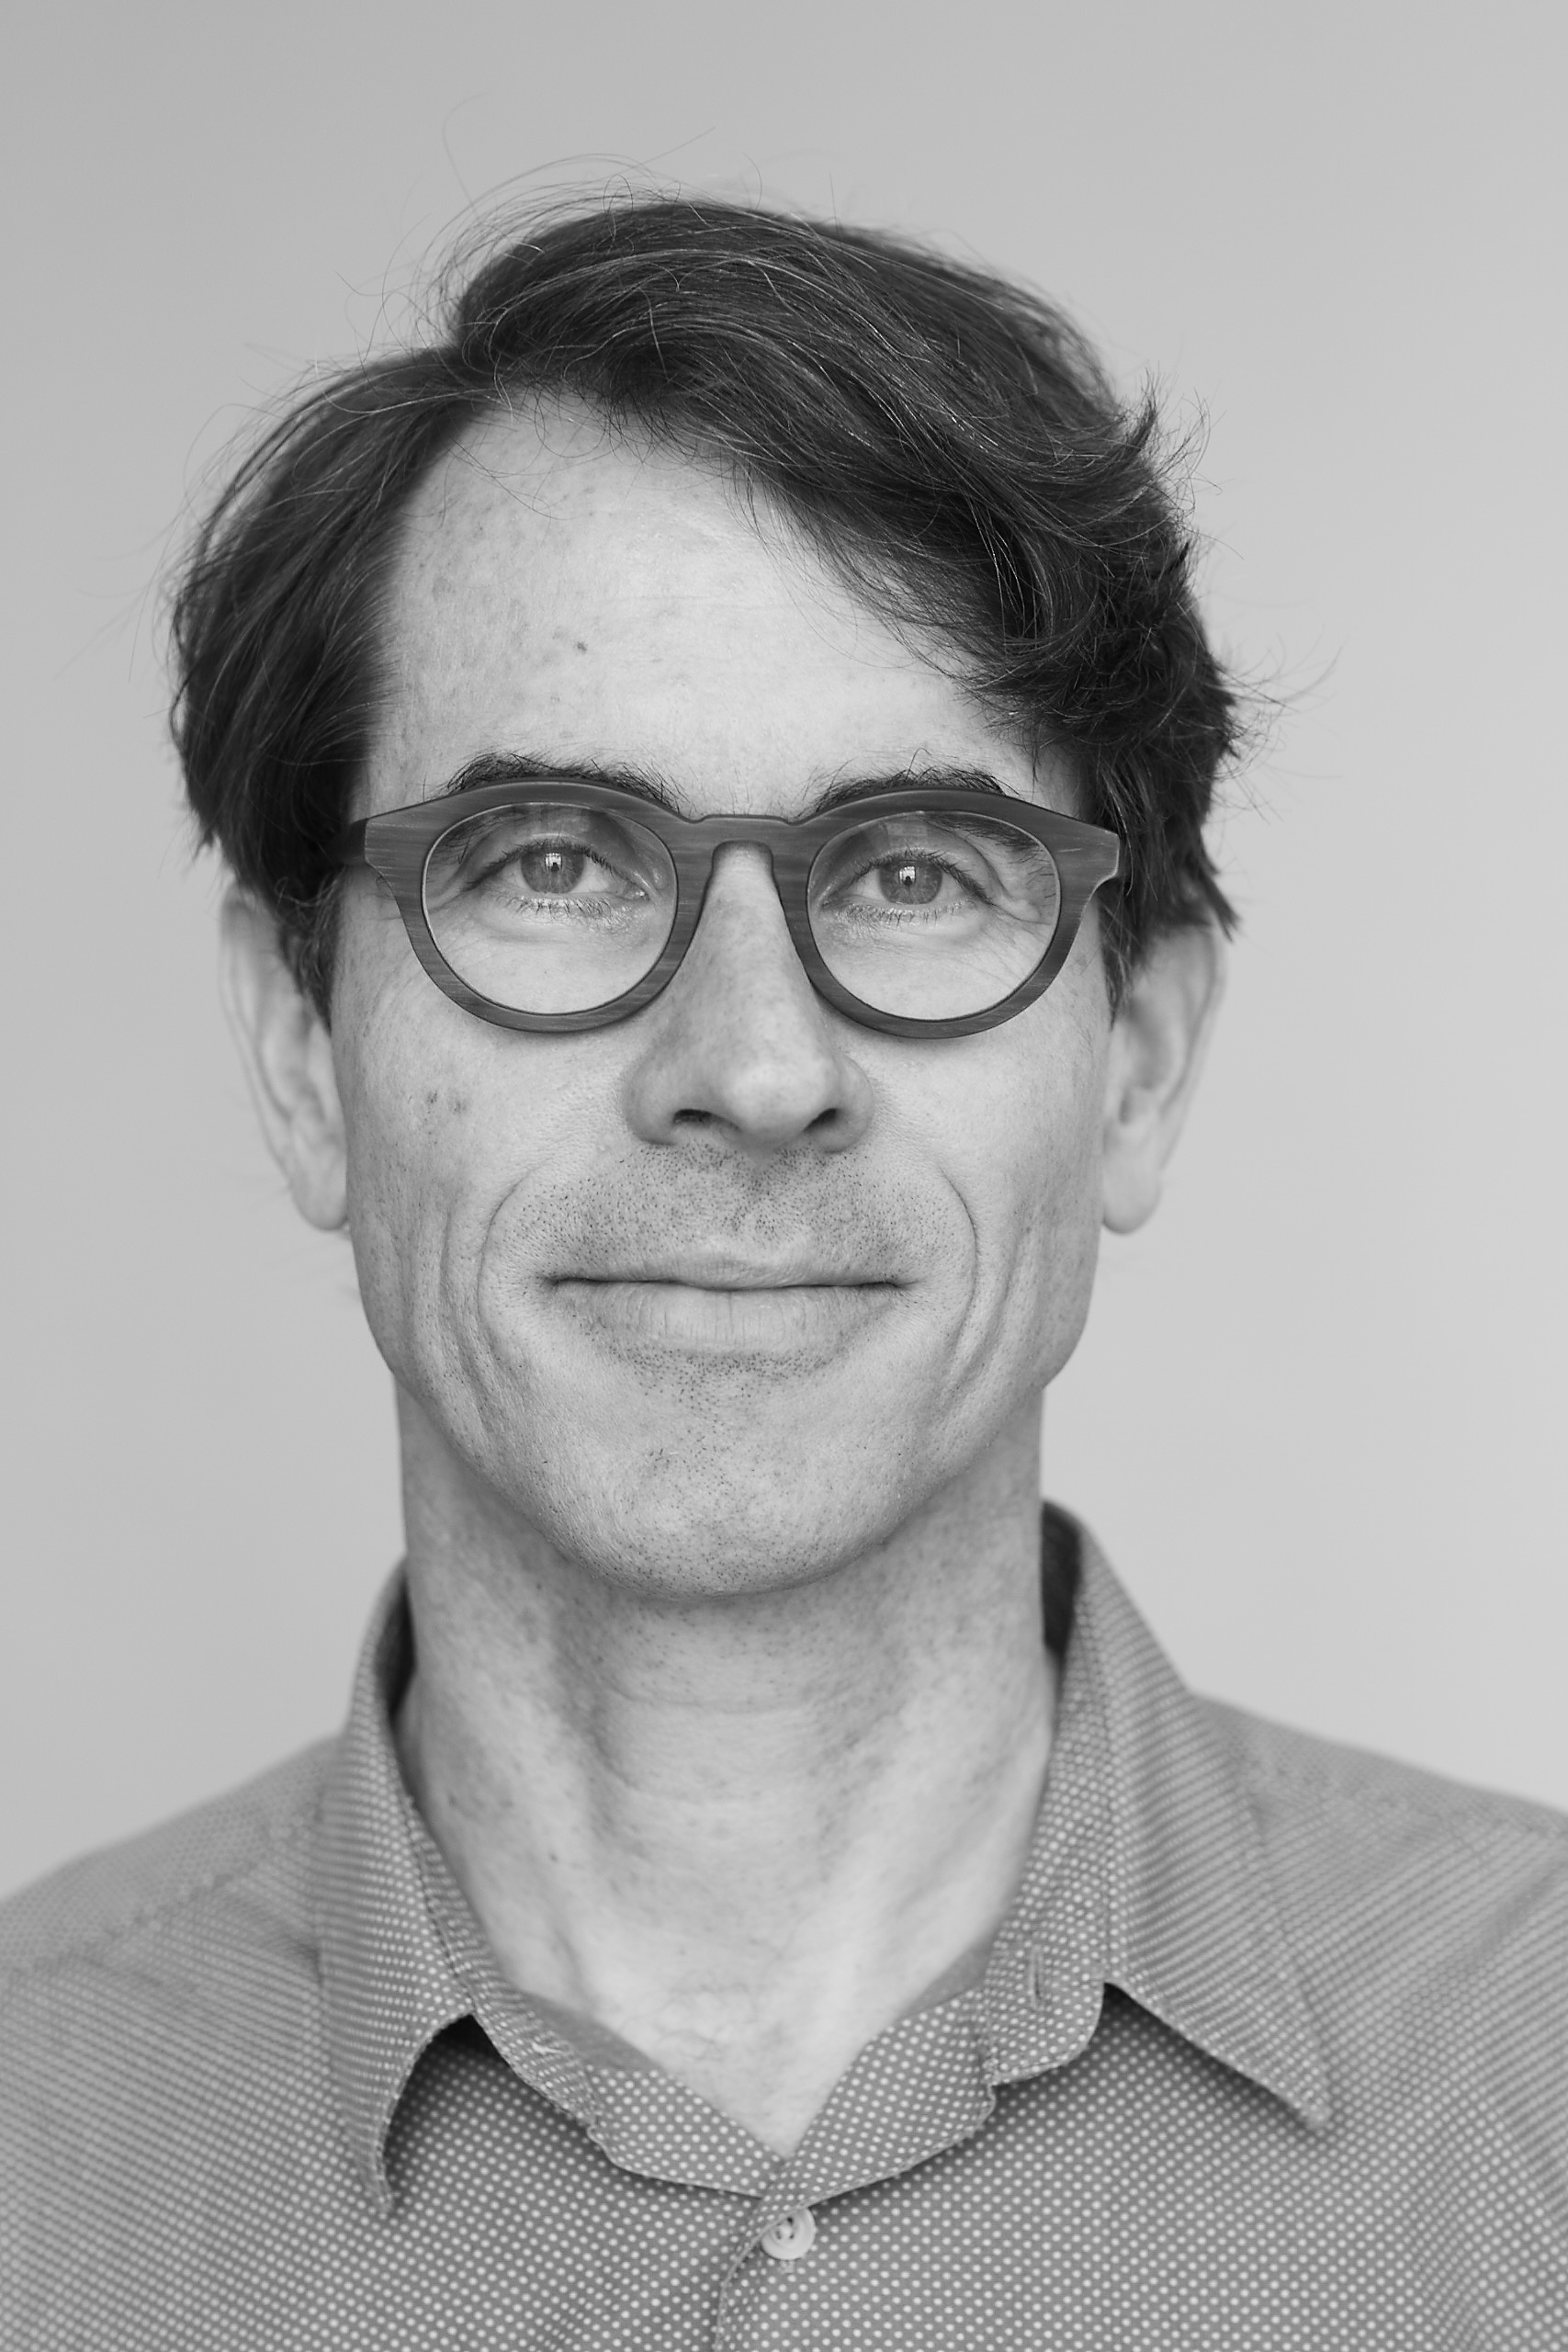 Jesper Grønbæk, Founder and CEO of Health Tech Hub Copenhagen